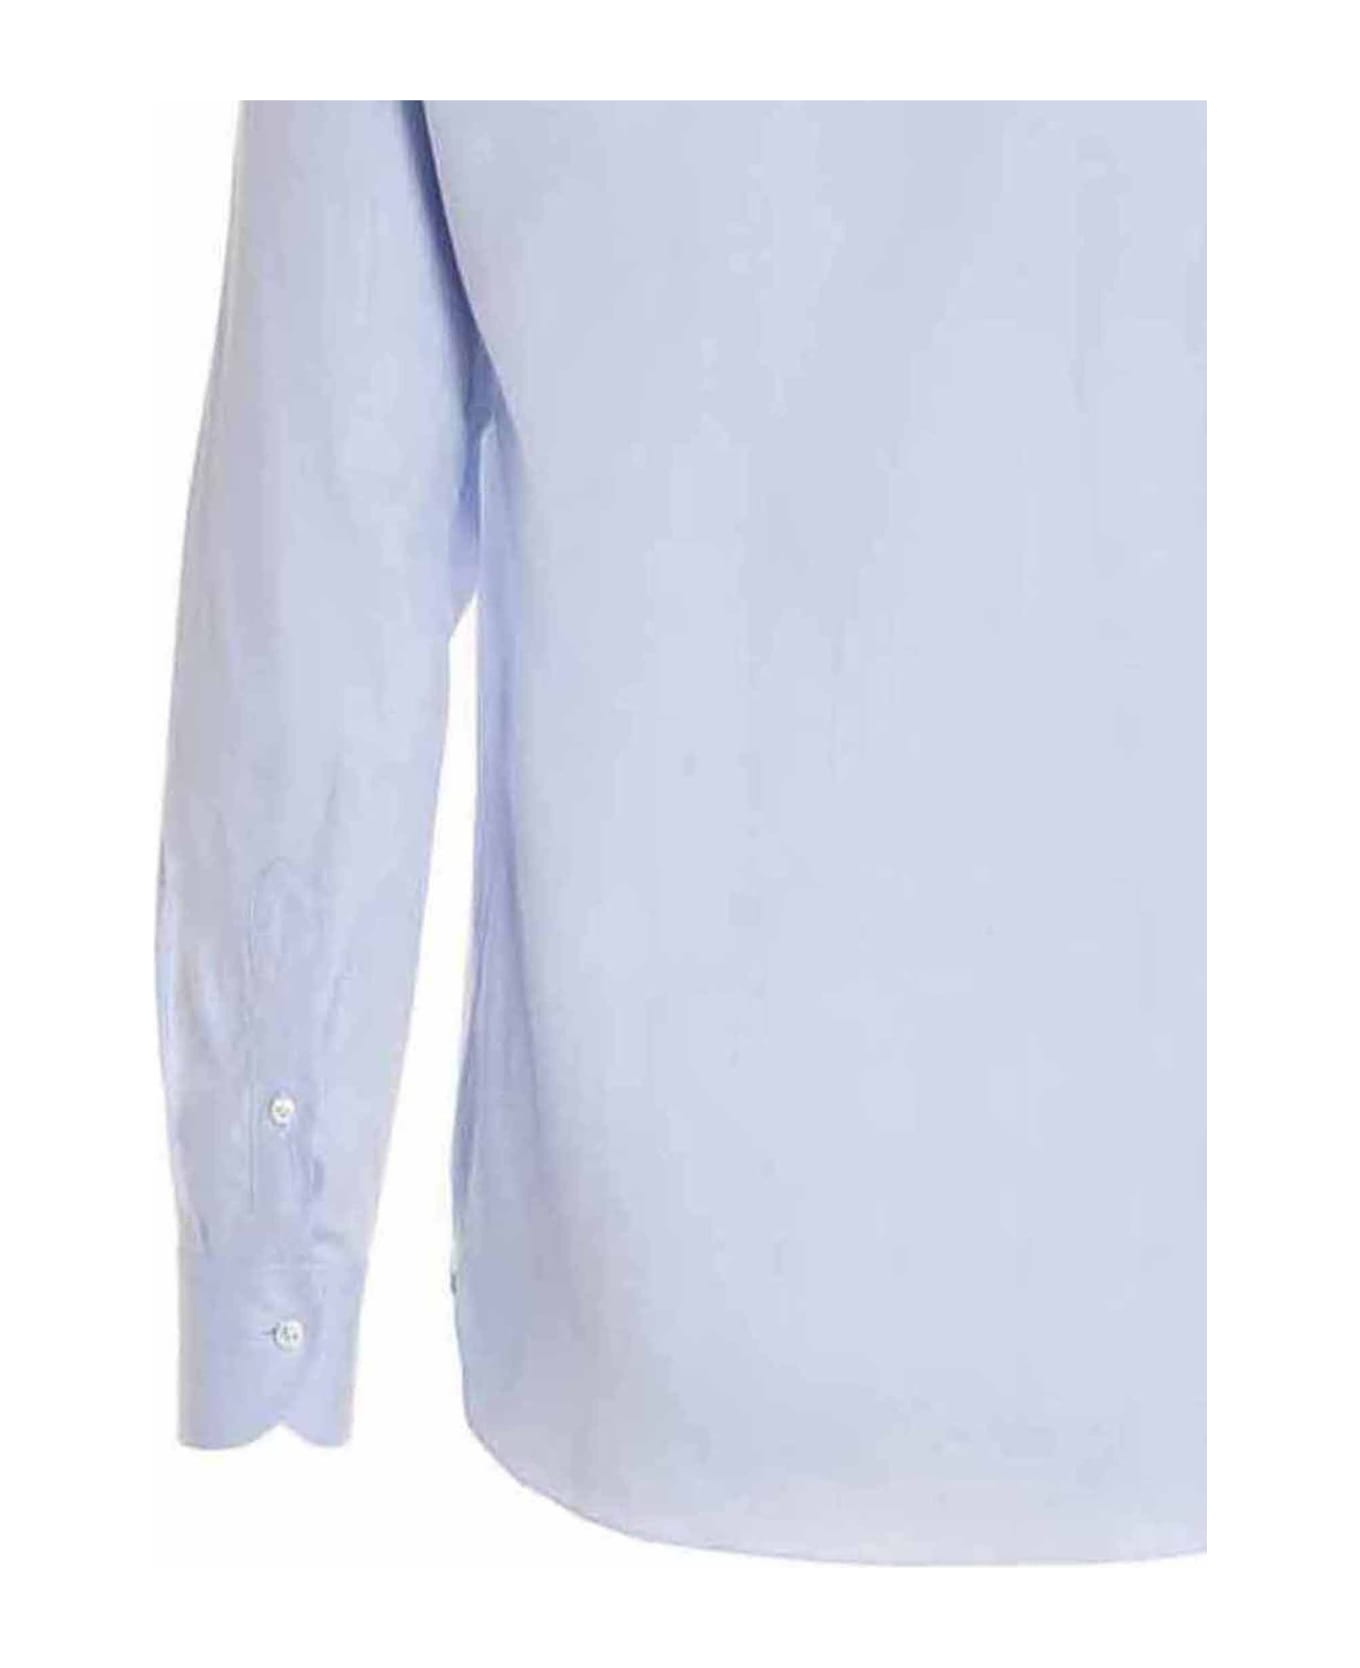 Borriello Napoli 'marechiaro' Shirt - Light Blue シャツ